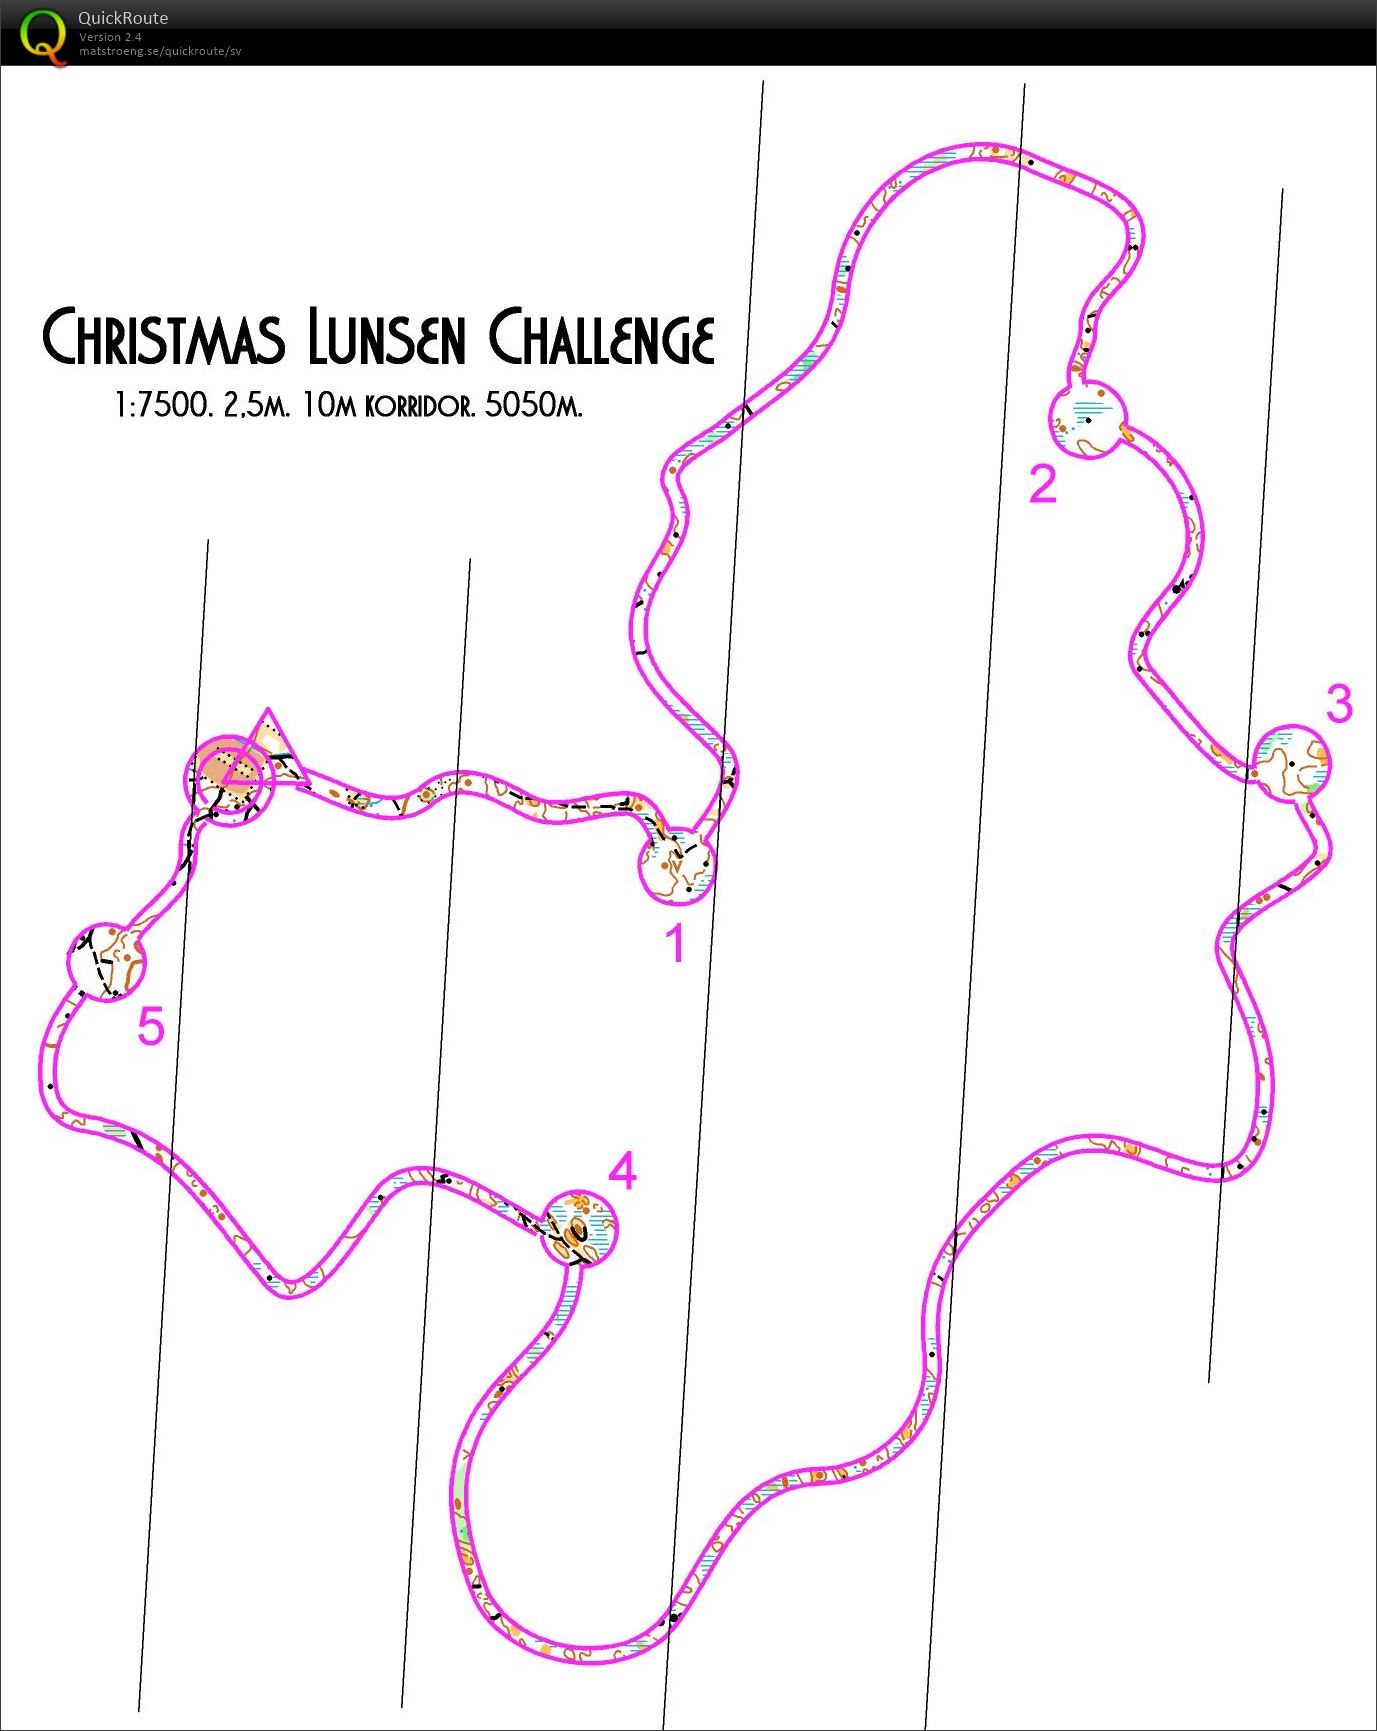 Christmas Lunsen Challenge (24/12/2016)